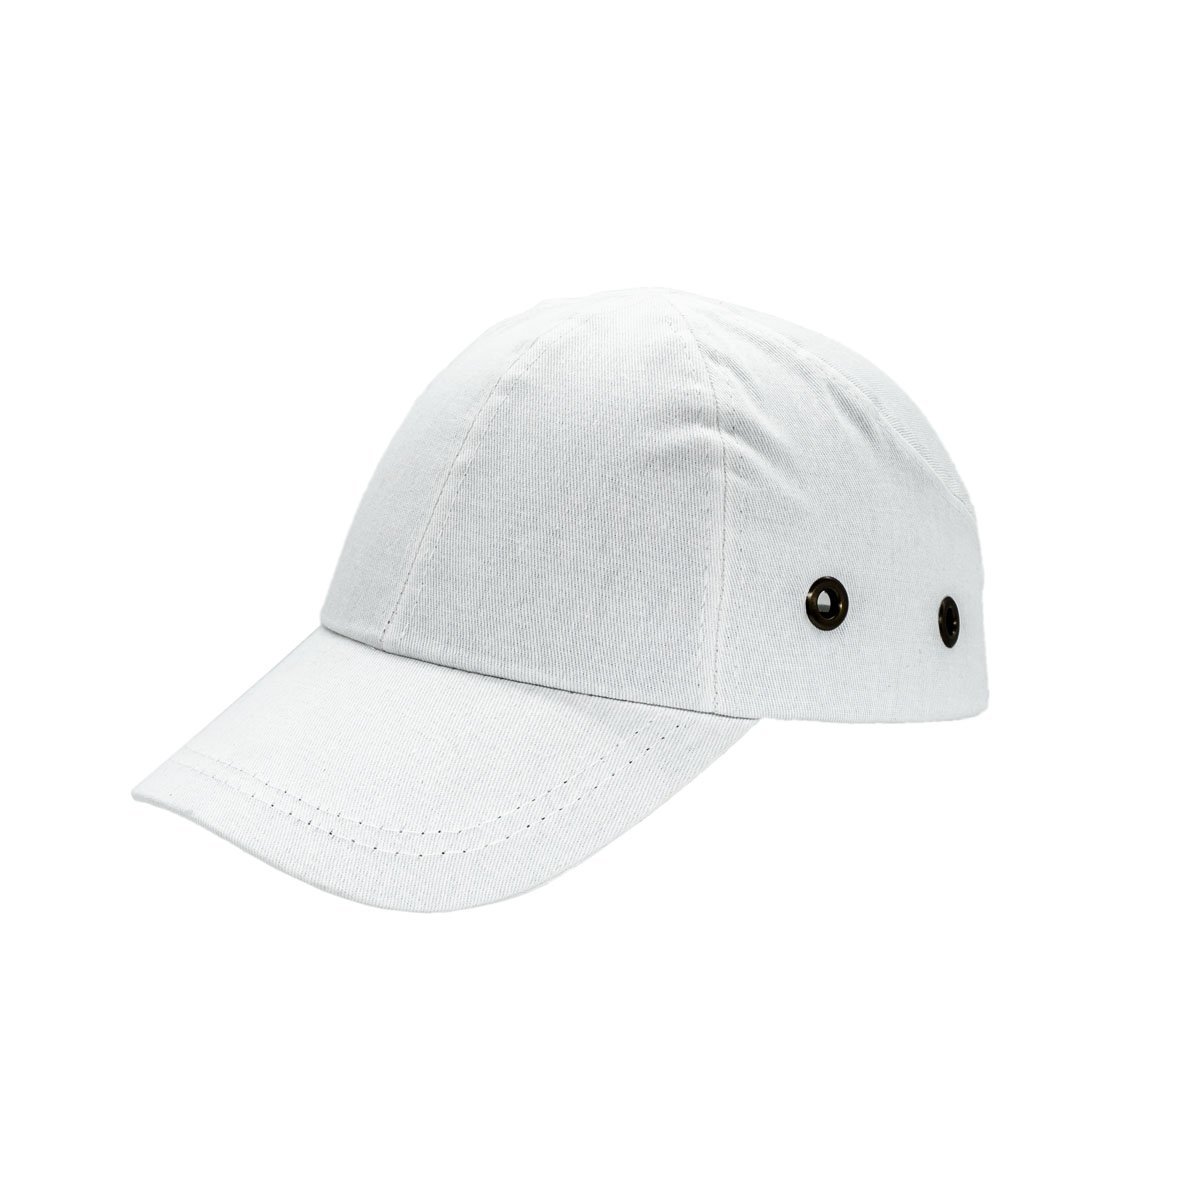 Darbe Emici Şapka Baret Kep  - Beyaz